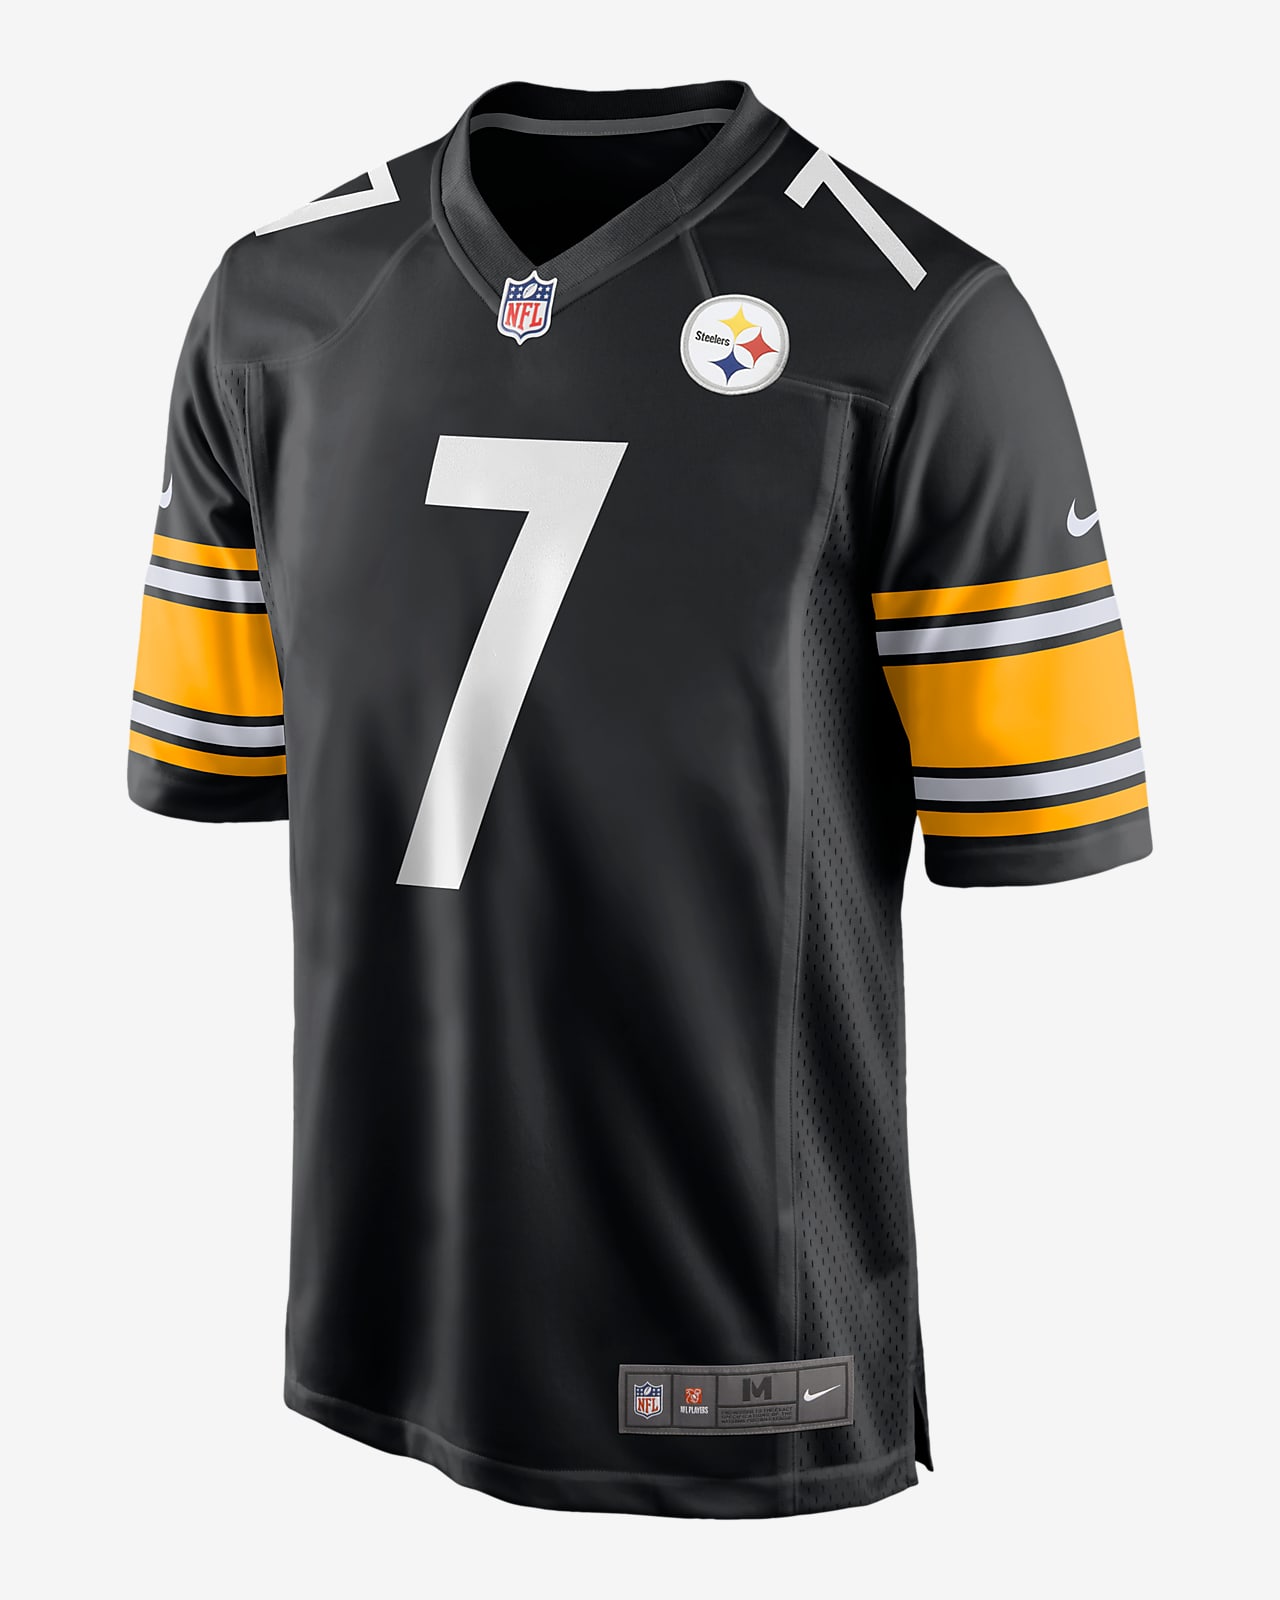 NFL Pittsburgh Steelers (Ben Roethlisberger) American-Football-Spieltrikot für Herren